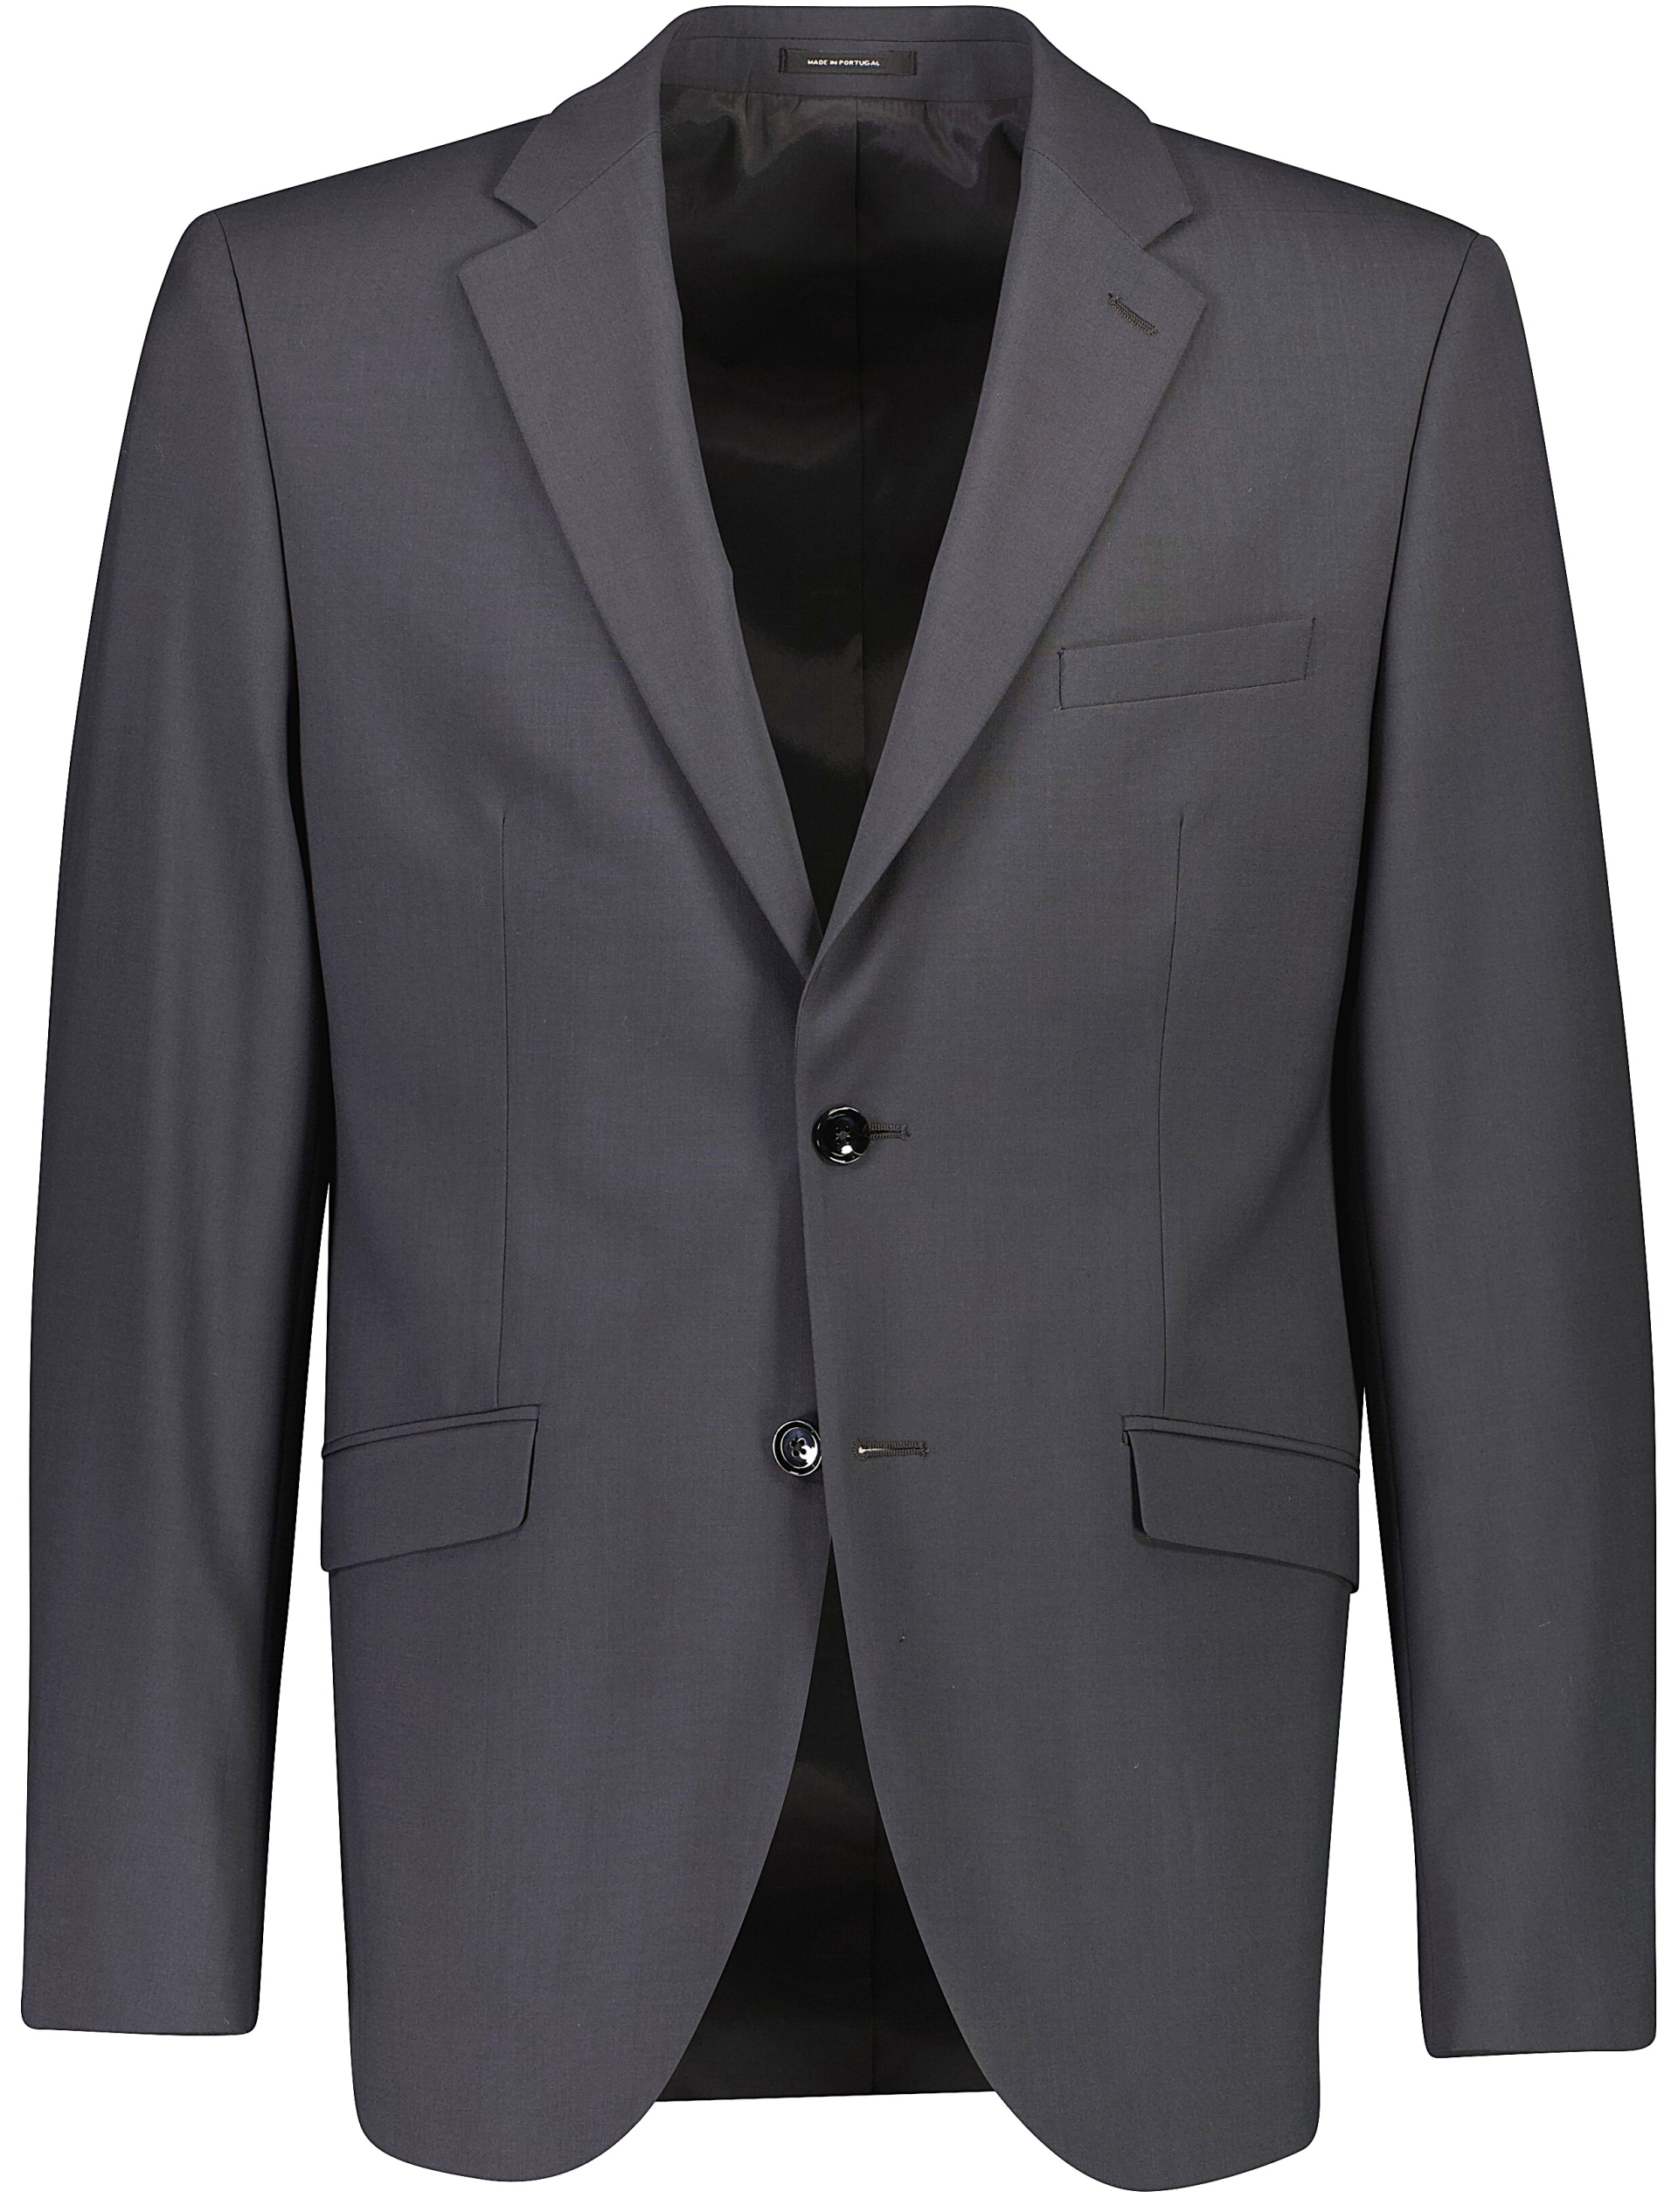 Lindbergh Suit jacket grey / dk grey